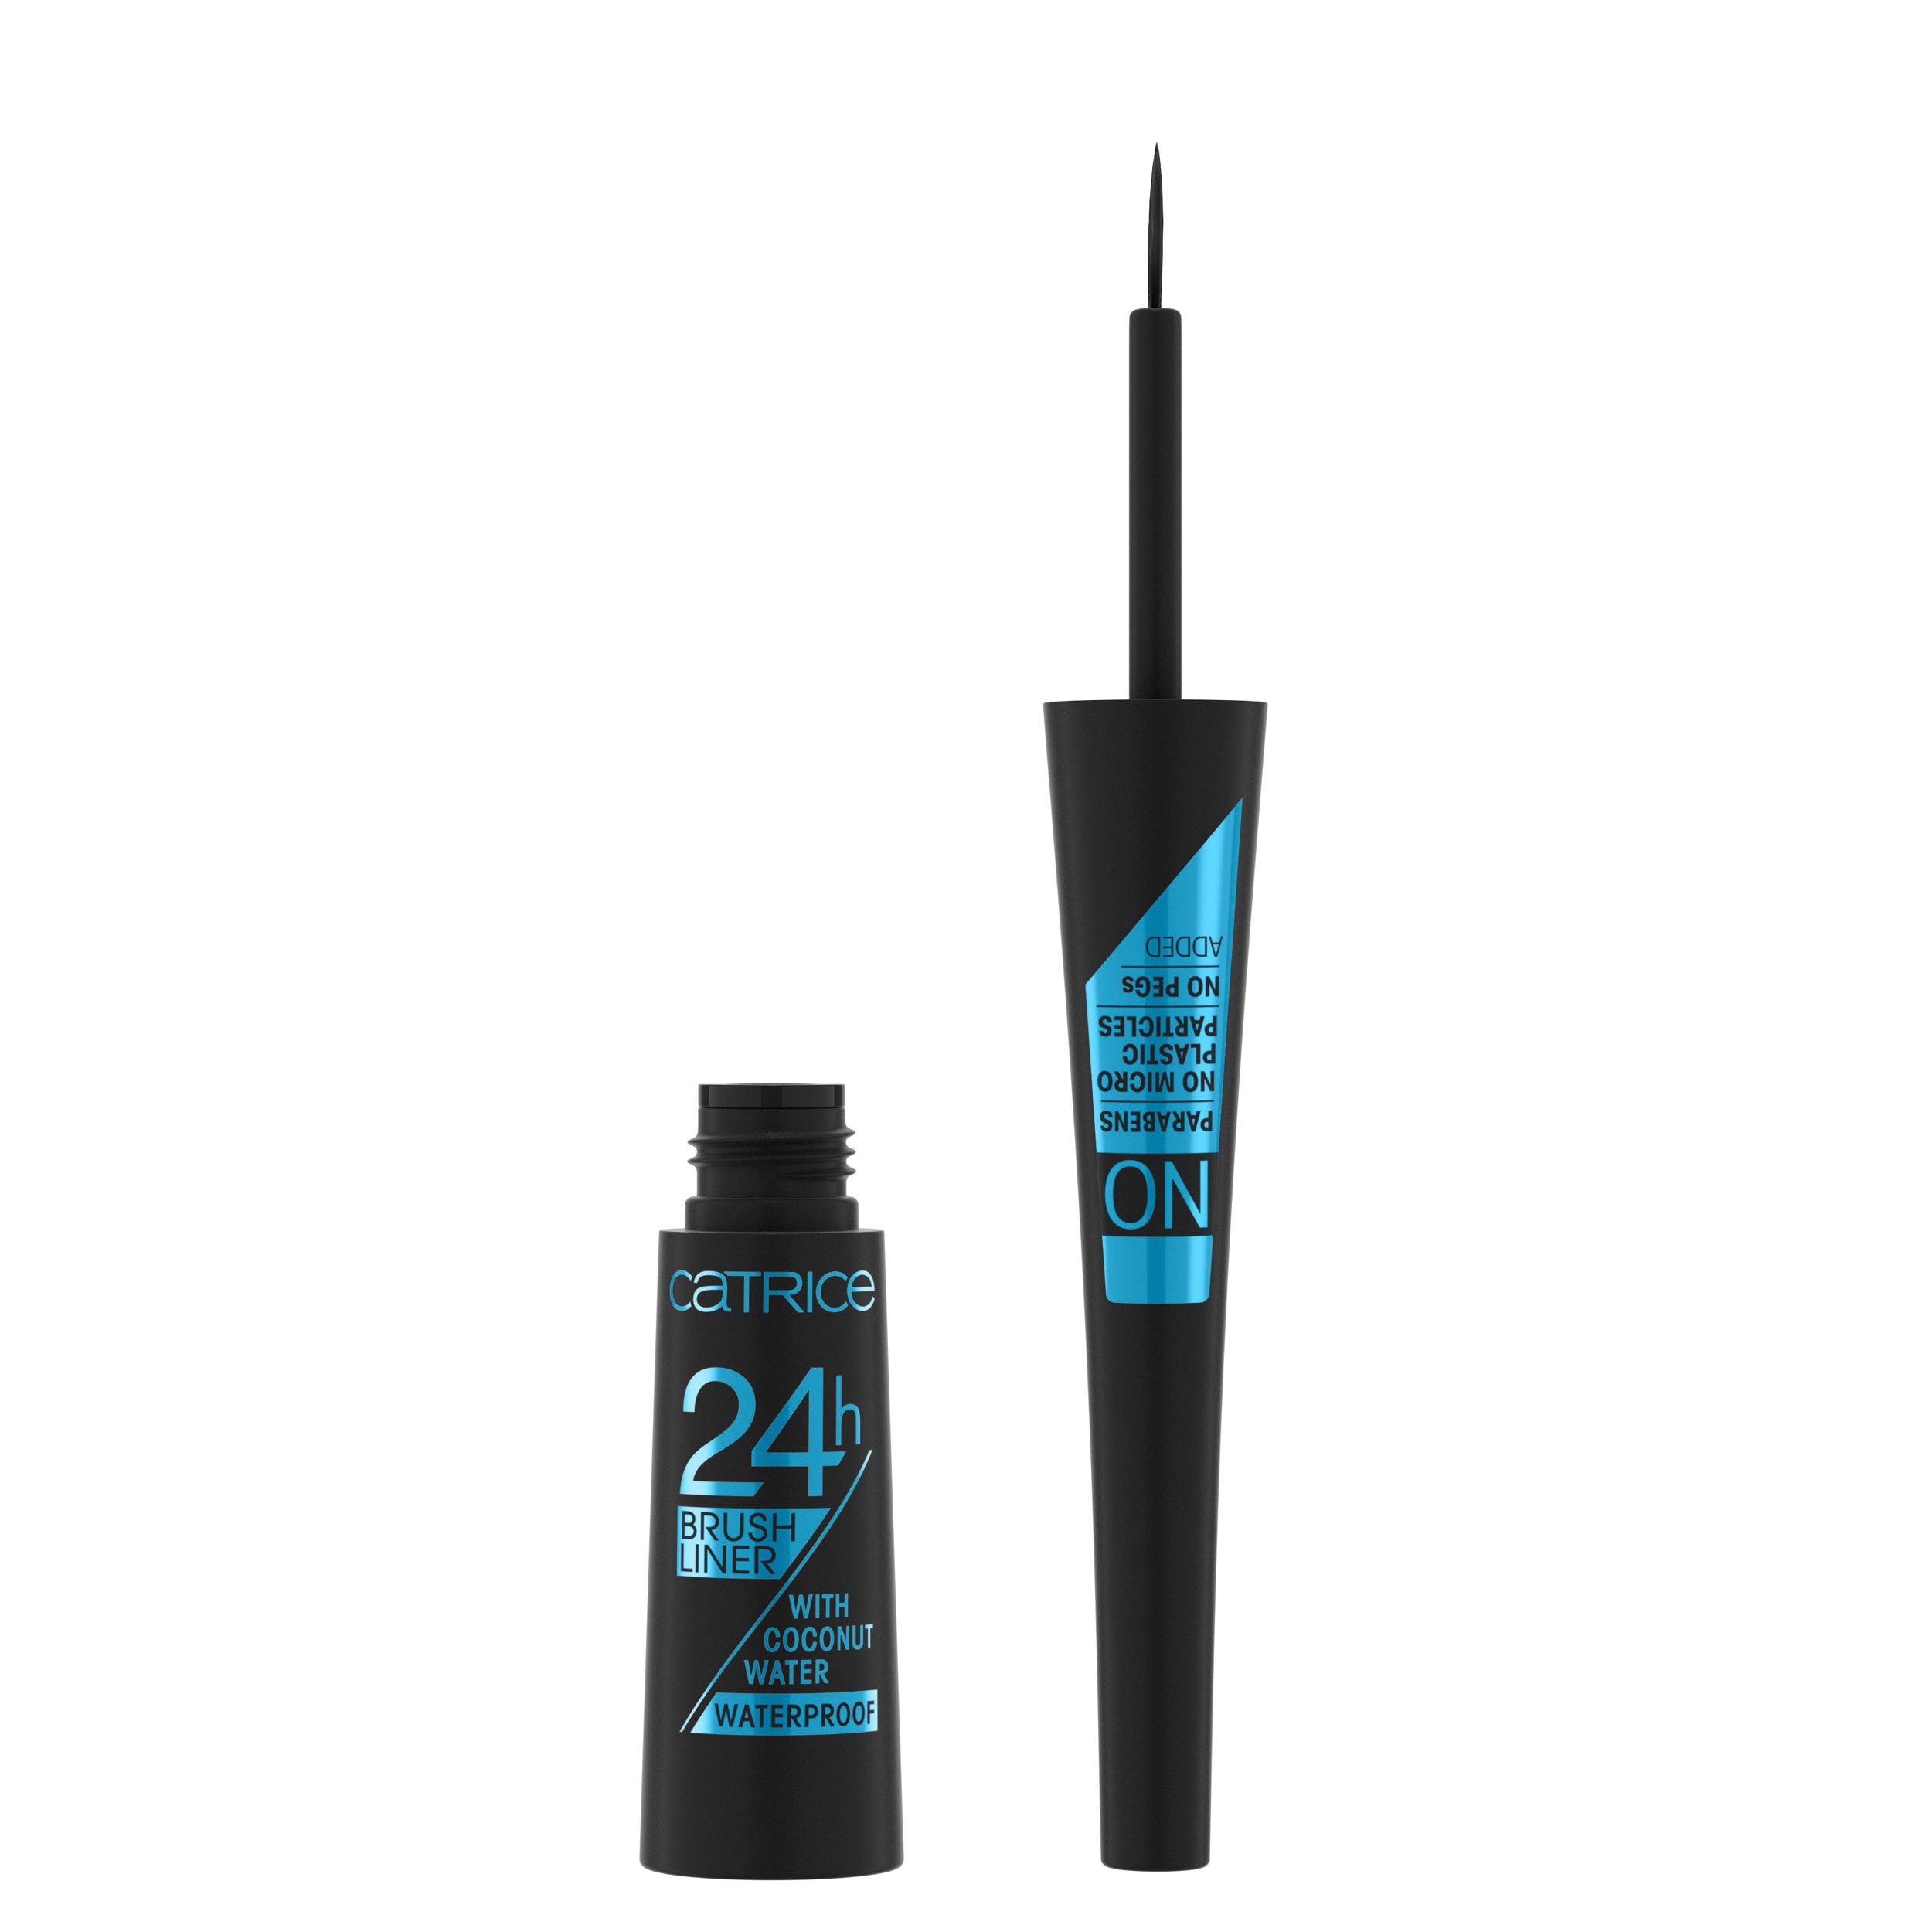 Flüssig-Eyeliner - 24h Brush Liner Waterproof